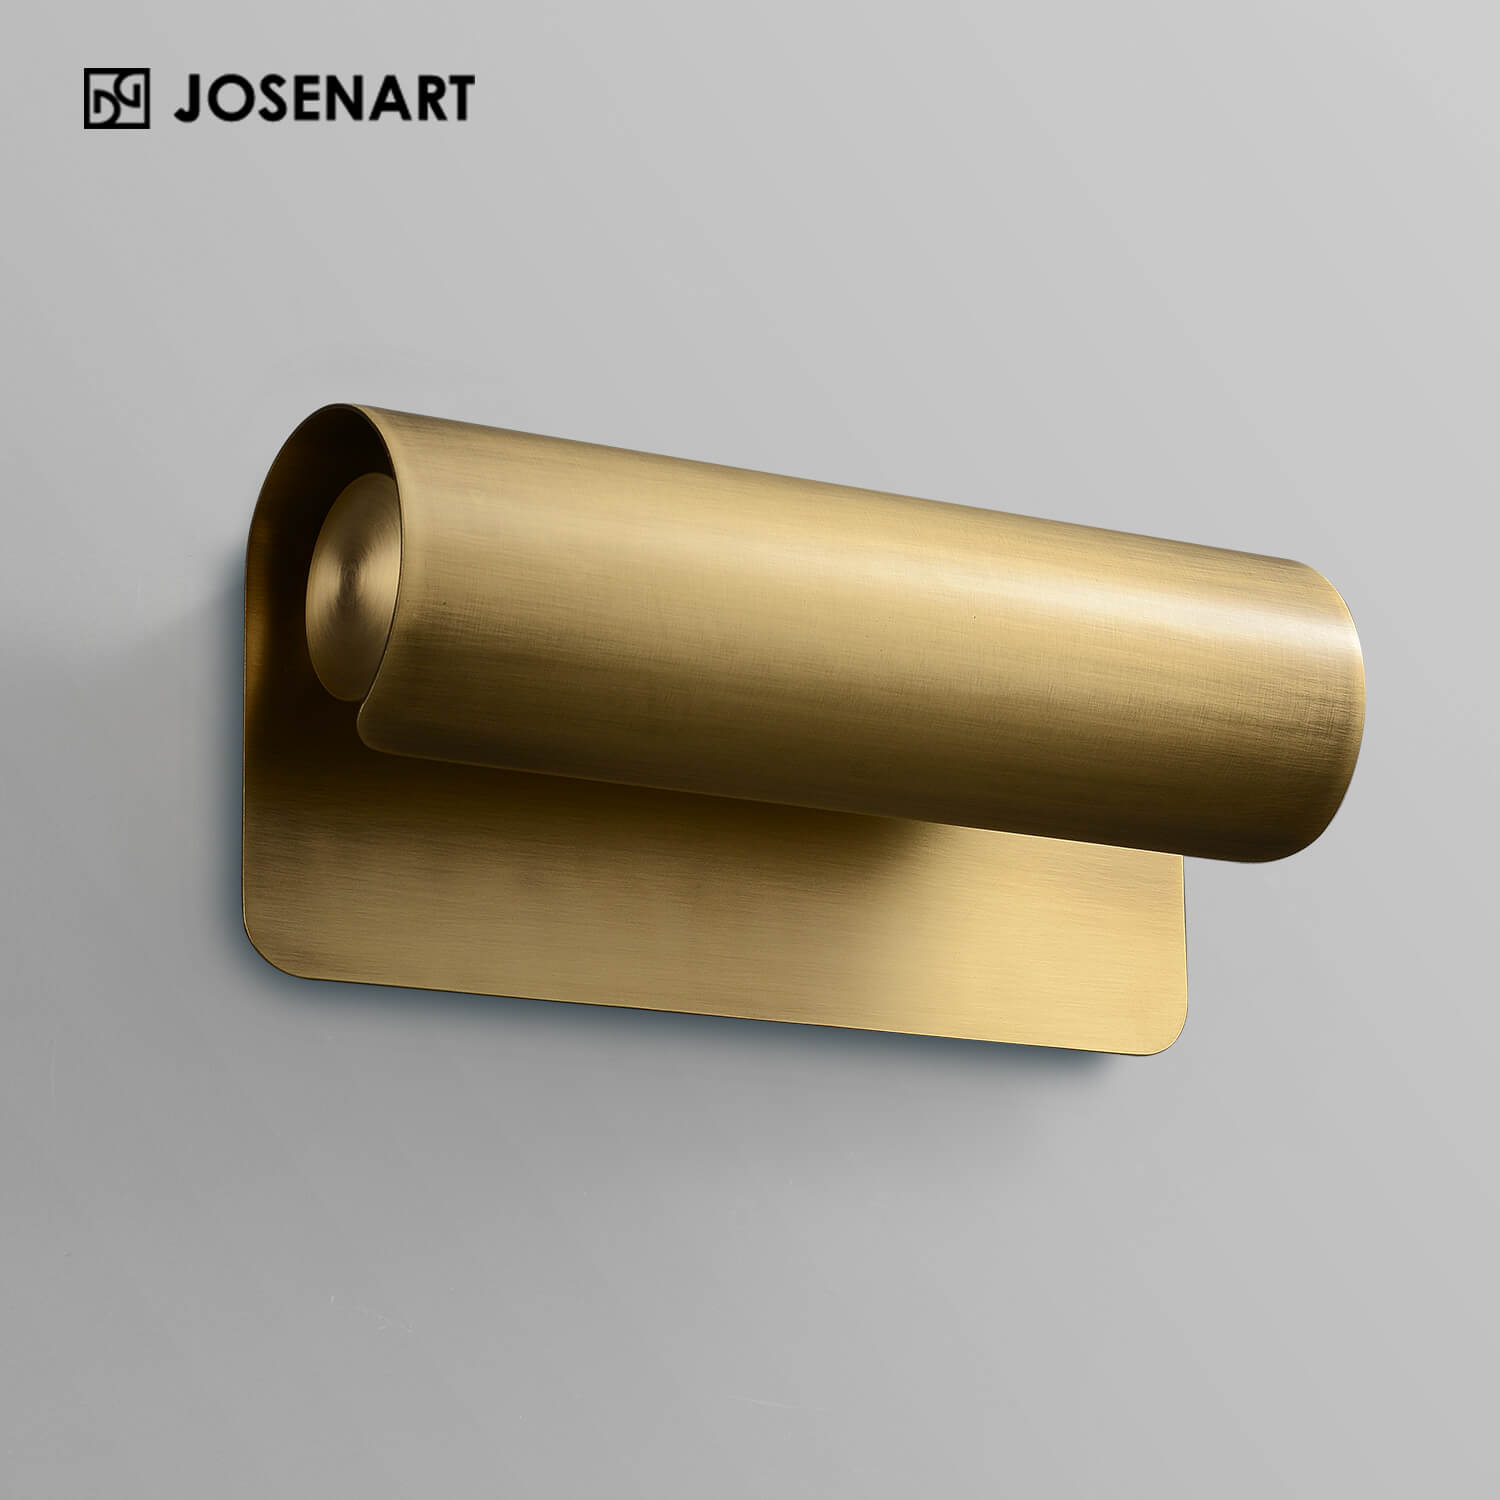 Accord 1 Light Wall Sconce in Aged Brass JOSENART Josenart